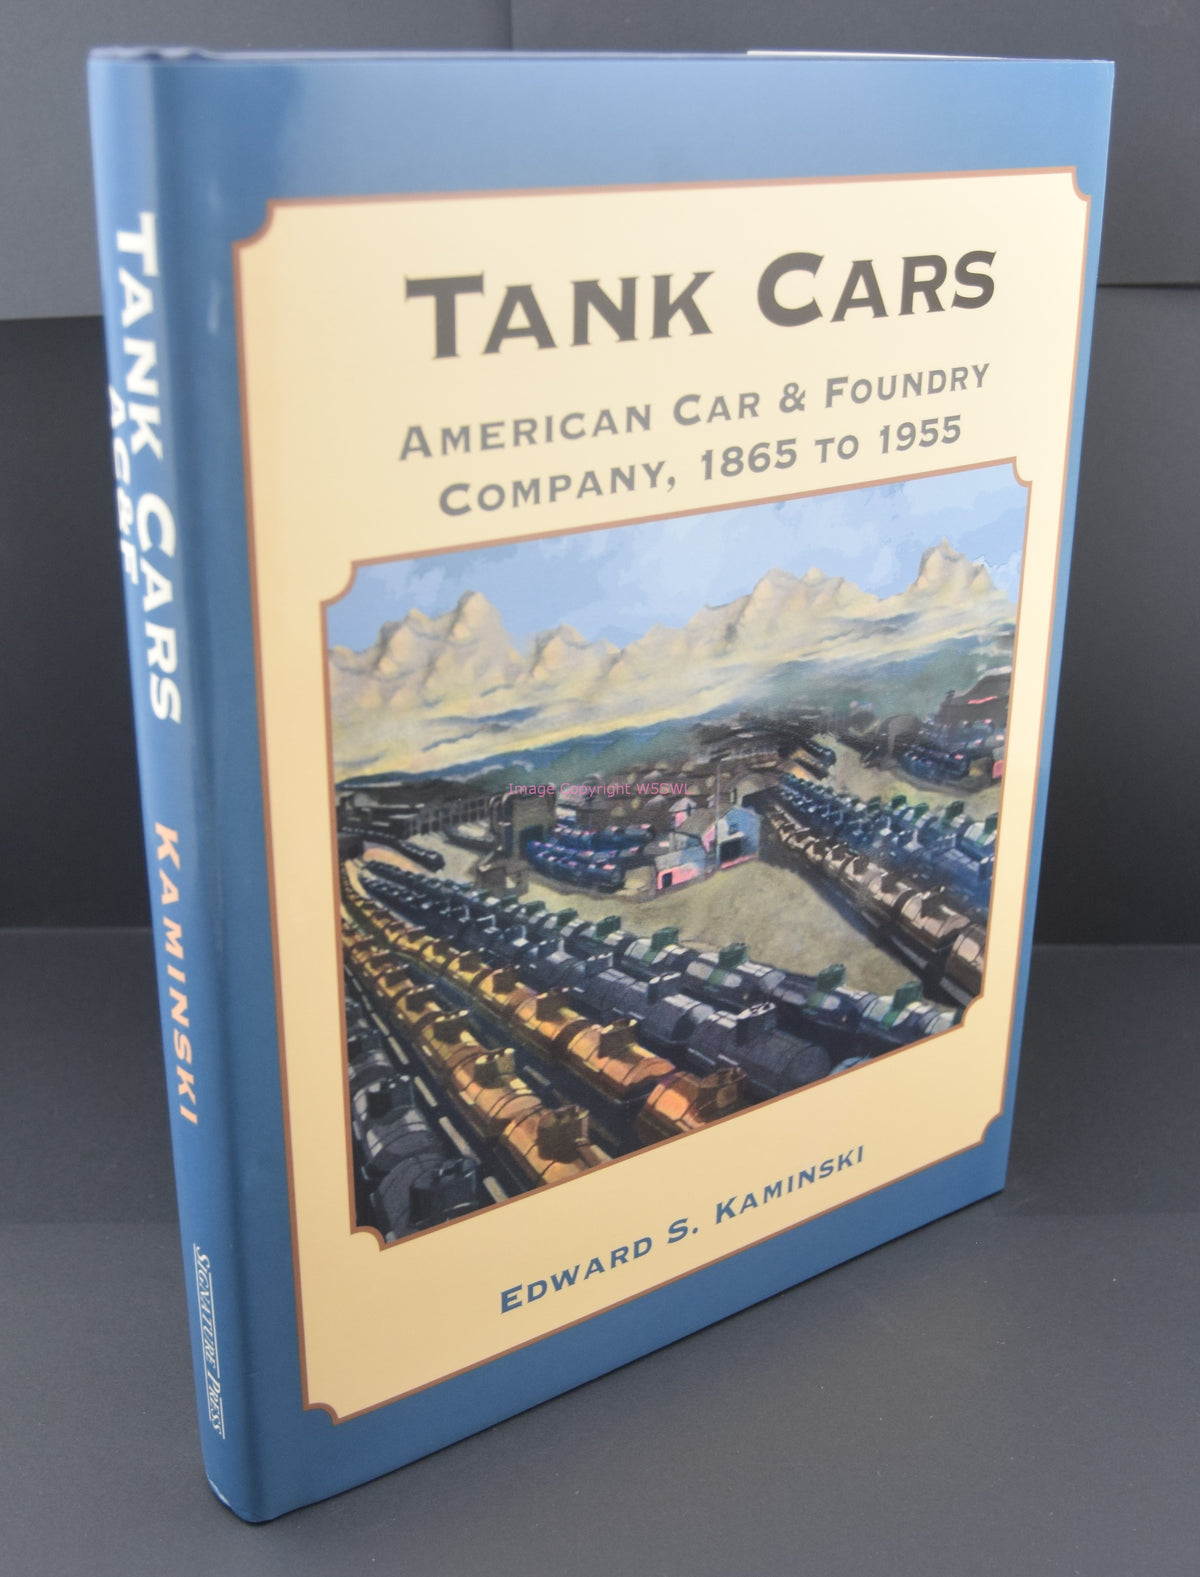 Tank Cars American Car & Foundry Company 1865 to 1955 by Kaminski - Dave's Hobby Shop by W5SWL